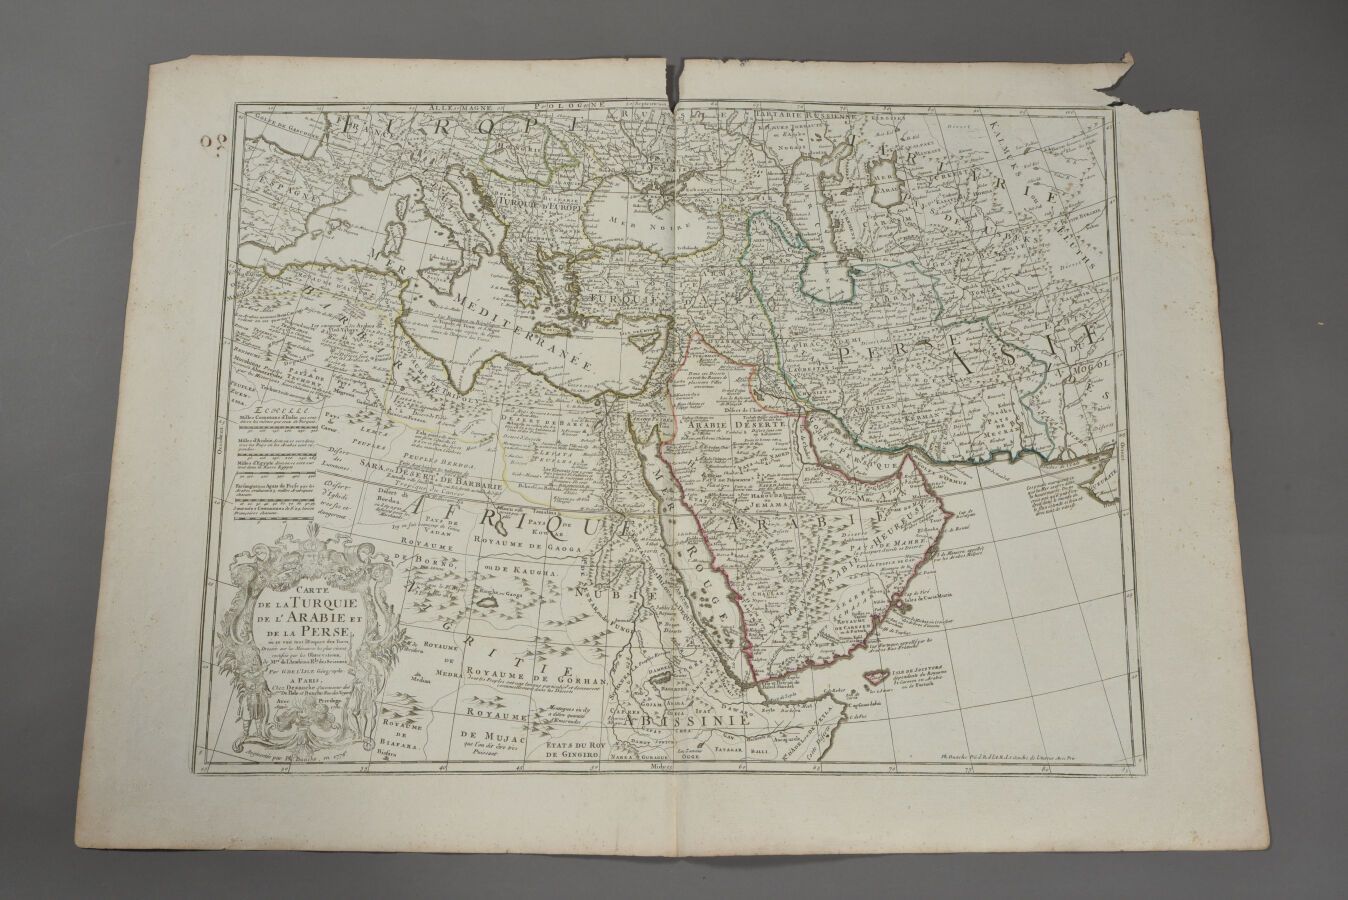 Null 纪尧姆-德利萨尔和他的继承人德佐赫
(法国，18世纪)
土耳其、阿拉伯和波斯的地图。1780.
双开本。 
缺少标签的上半部分，右上角边缘有缺口。